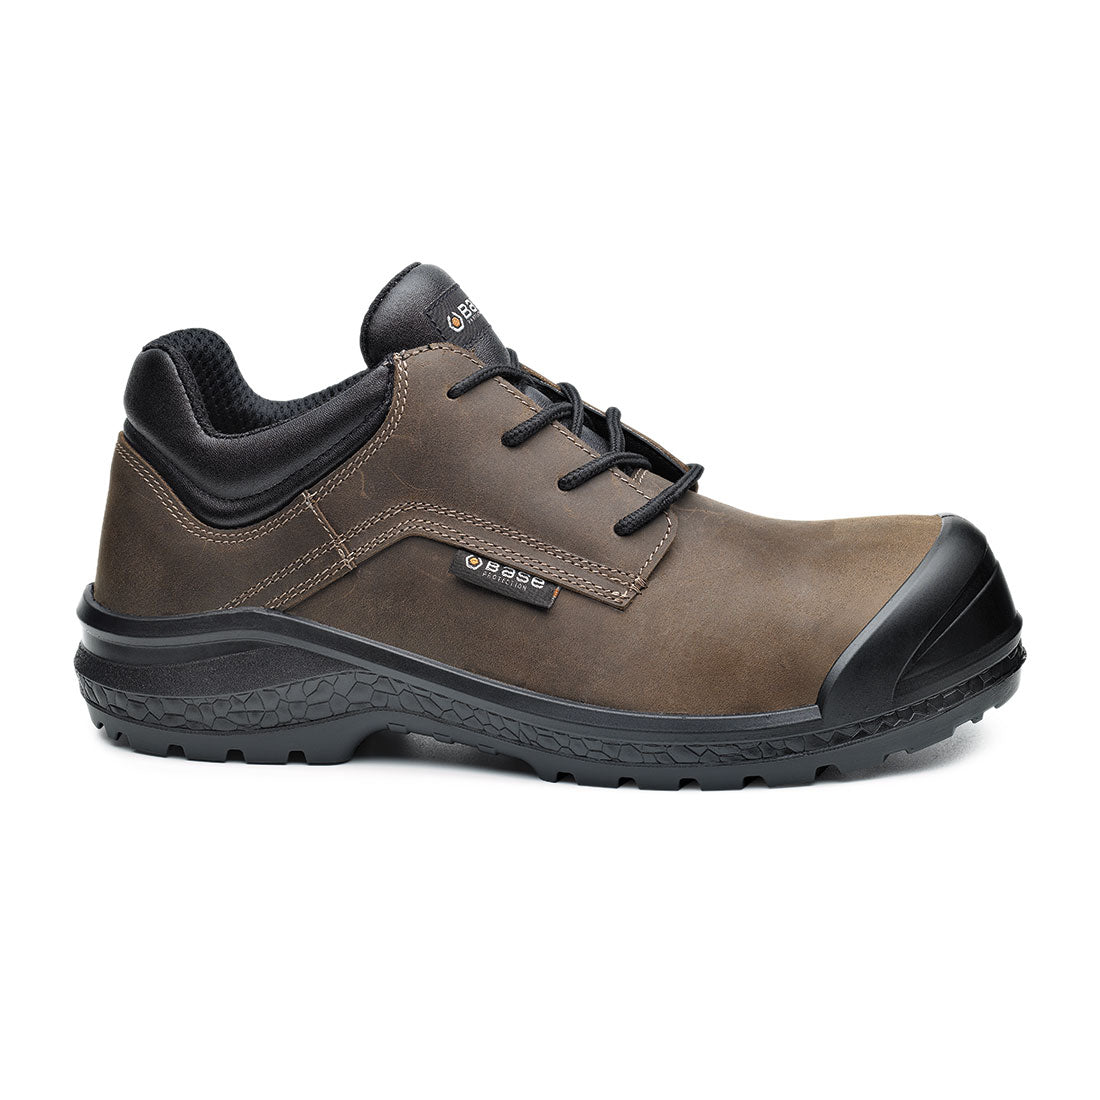 Base Be-Browny Safety Shoes S3 CI SRC